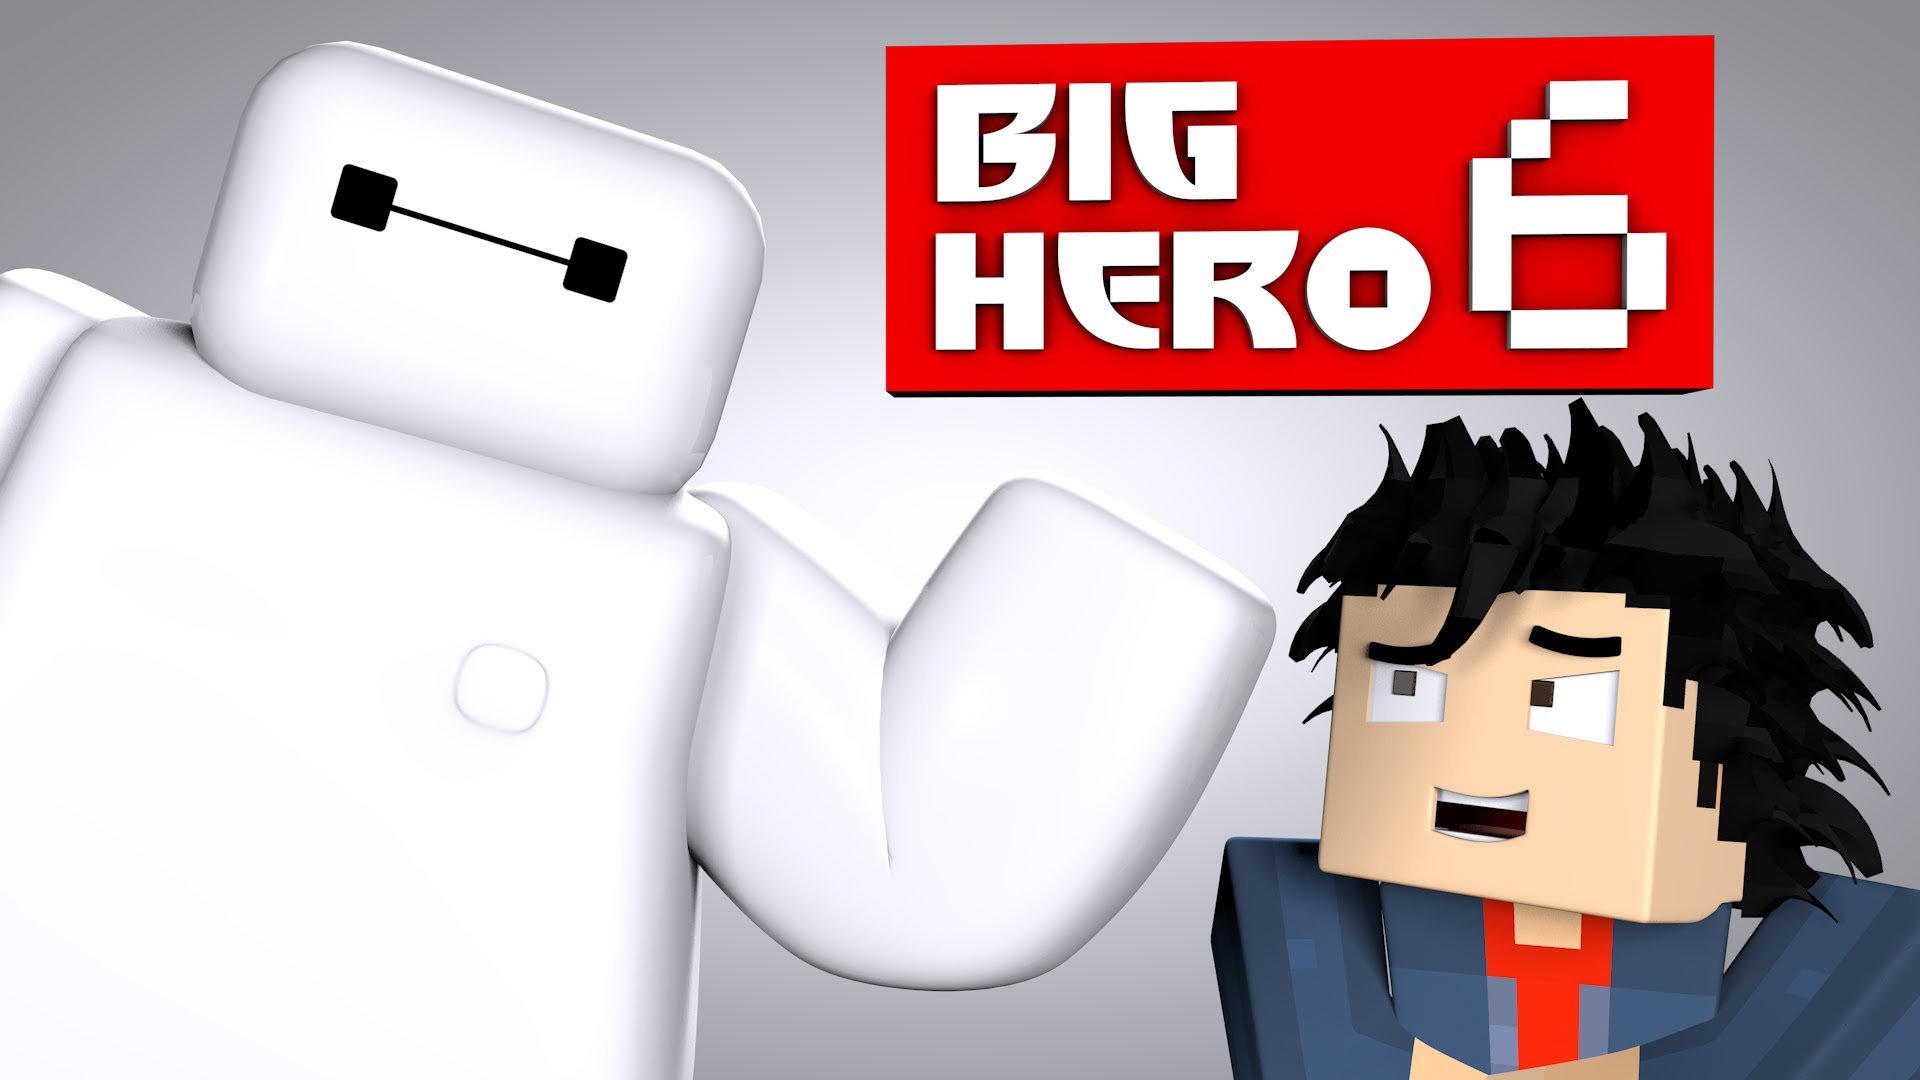 big hero 6, Animation, Action, Adventure, Disney, Robot, Superhero, Big, Hero, Futuristic, Poster Wallpaper